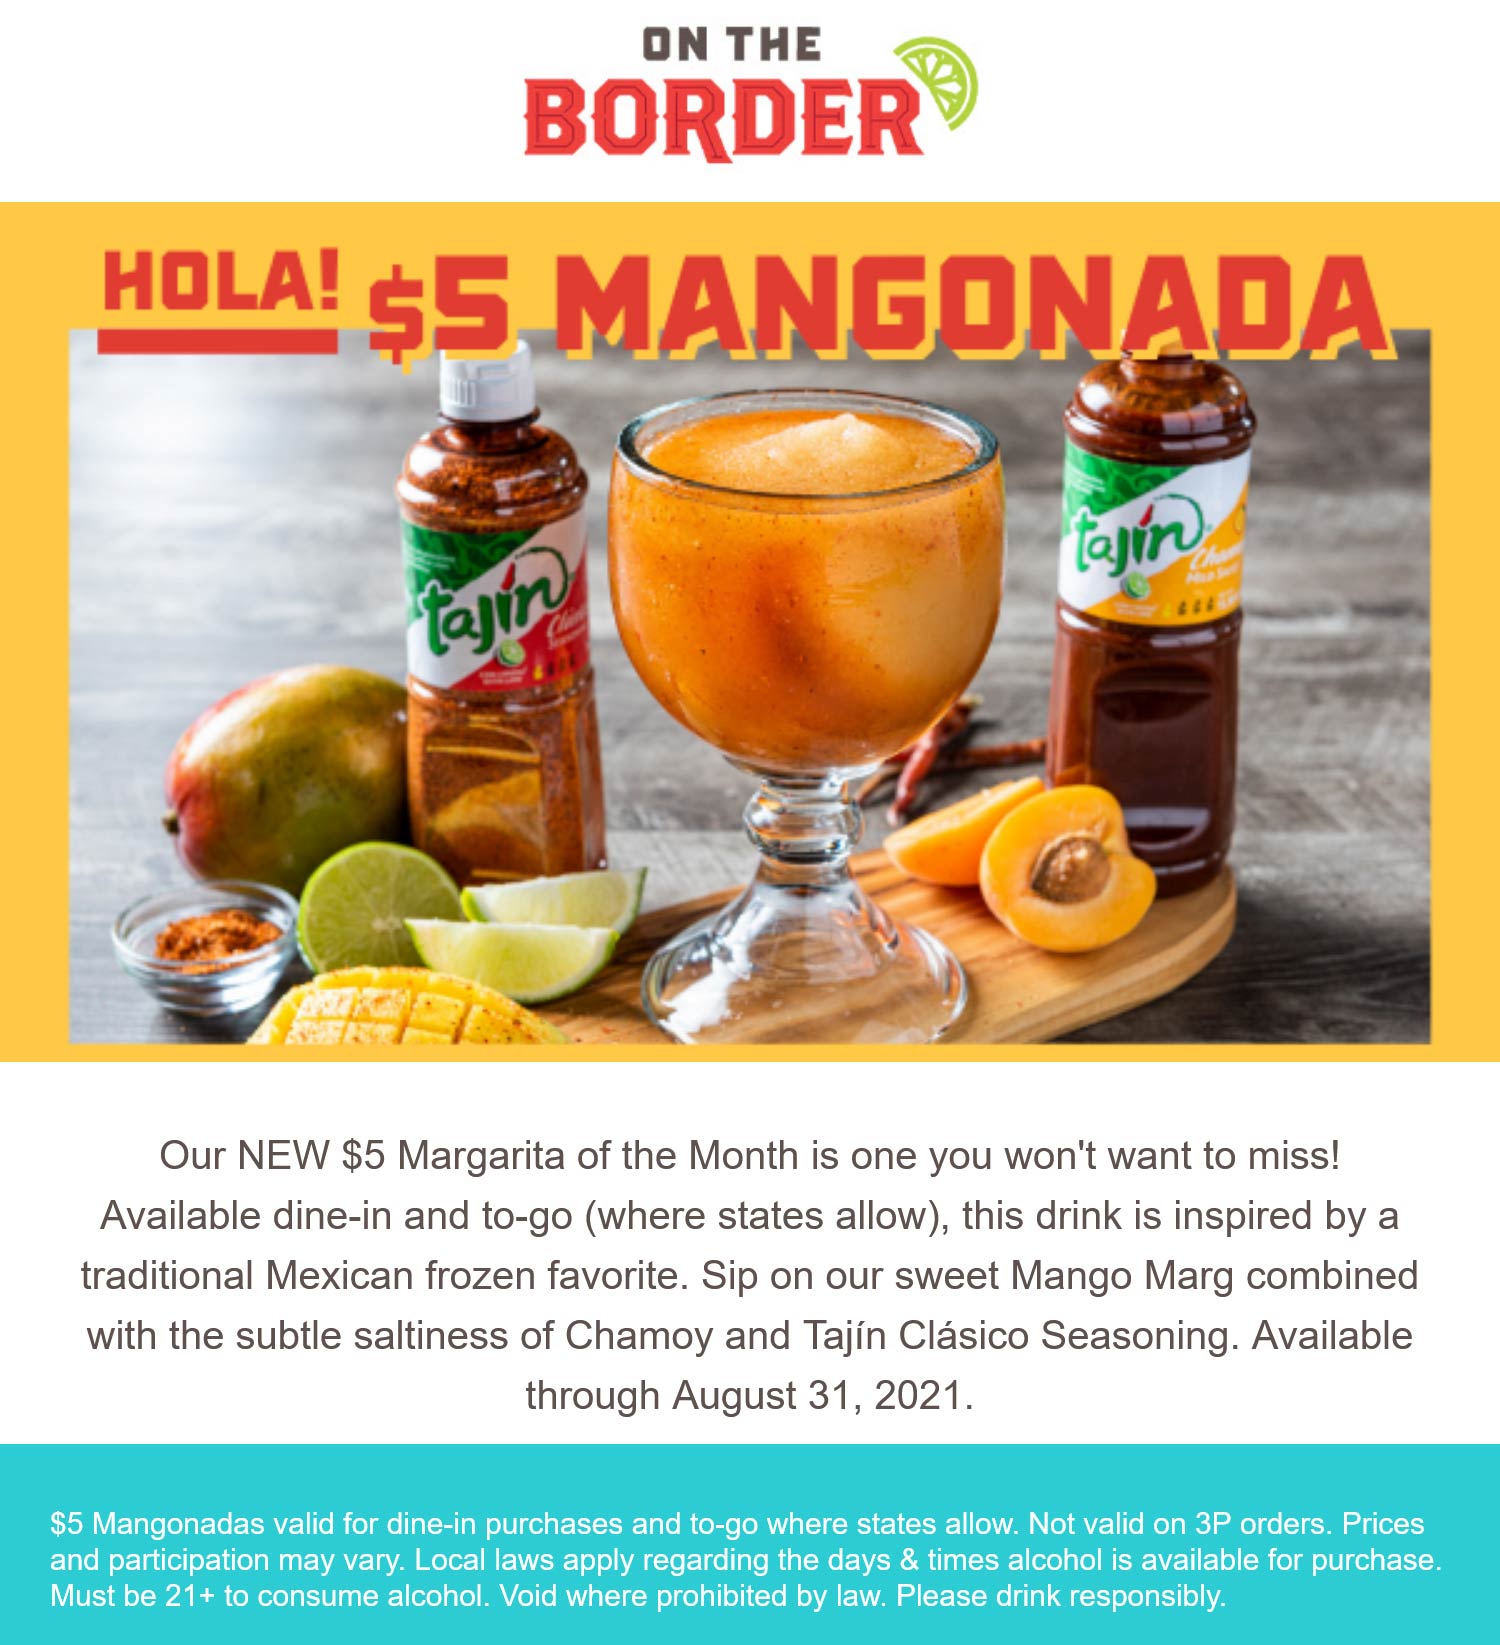 On The Border restaurants Coupon  $5 mangonadas all month at On The Border restaurants #ontheborder 